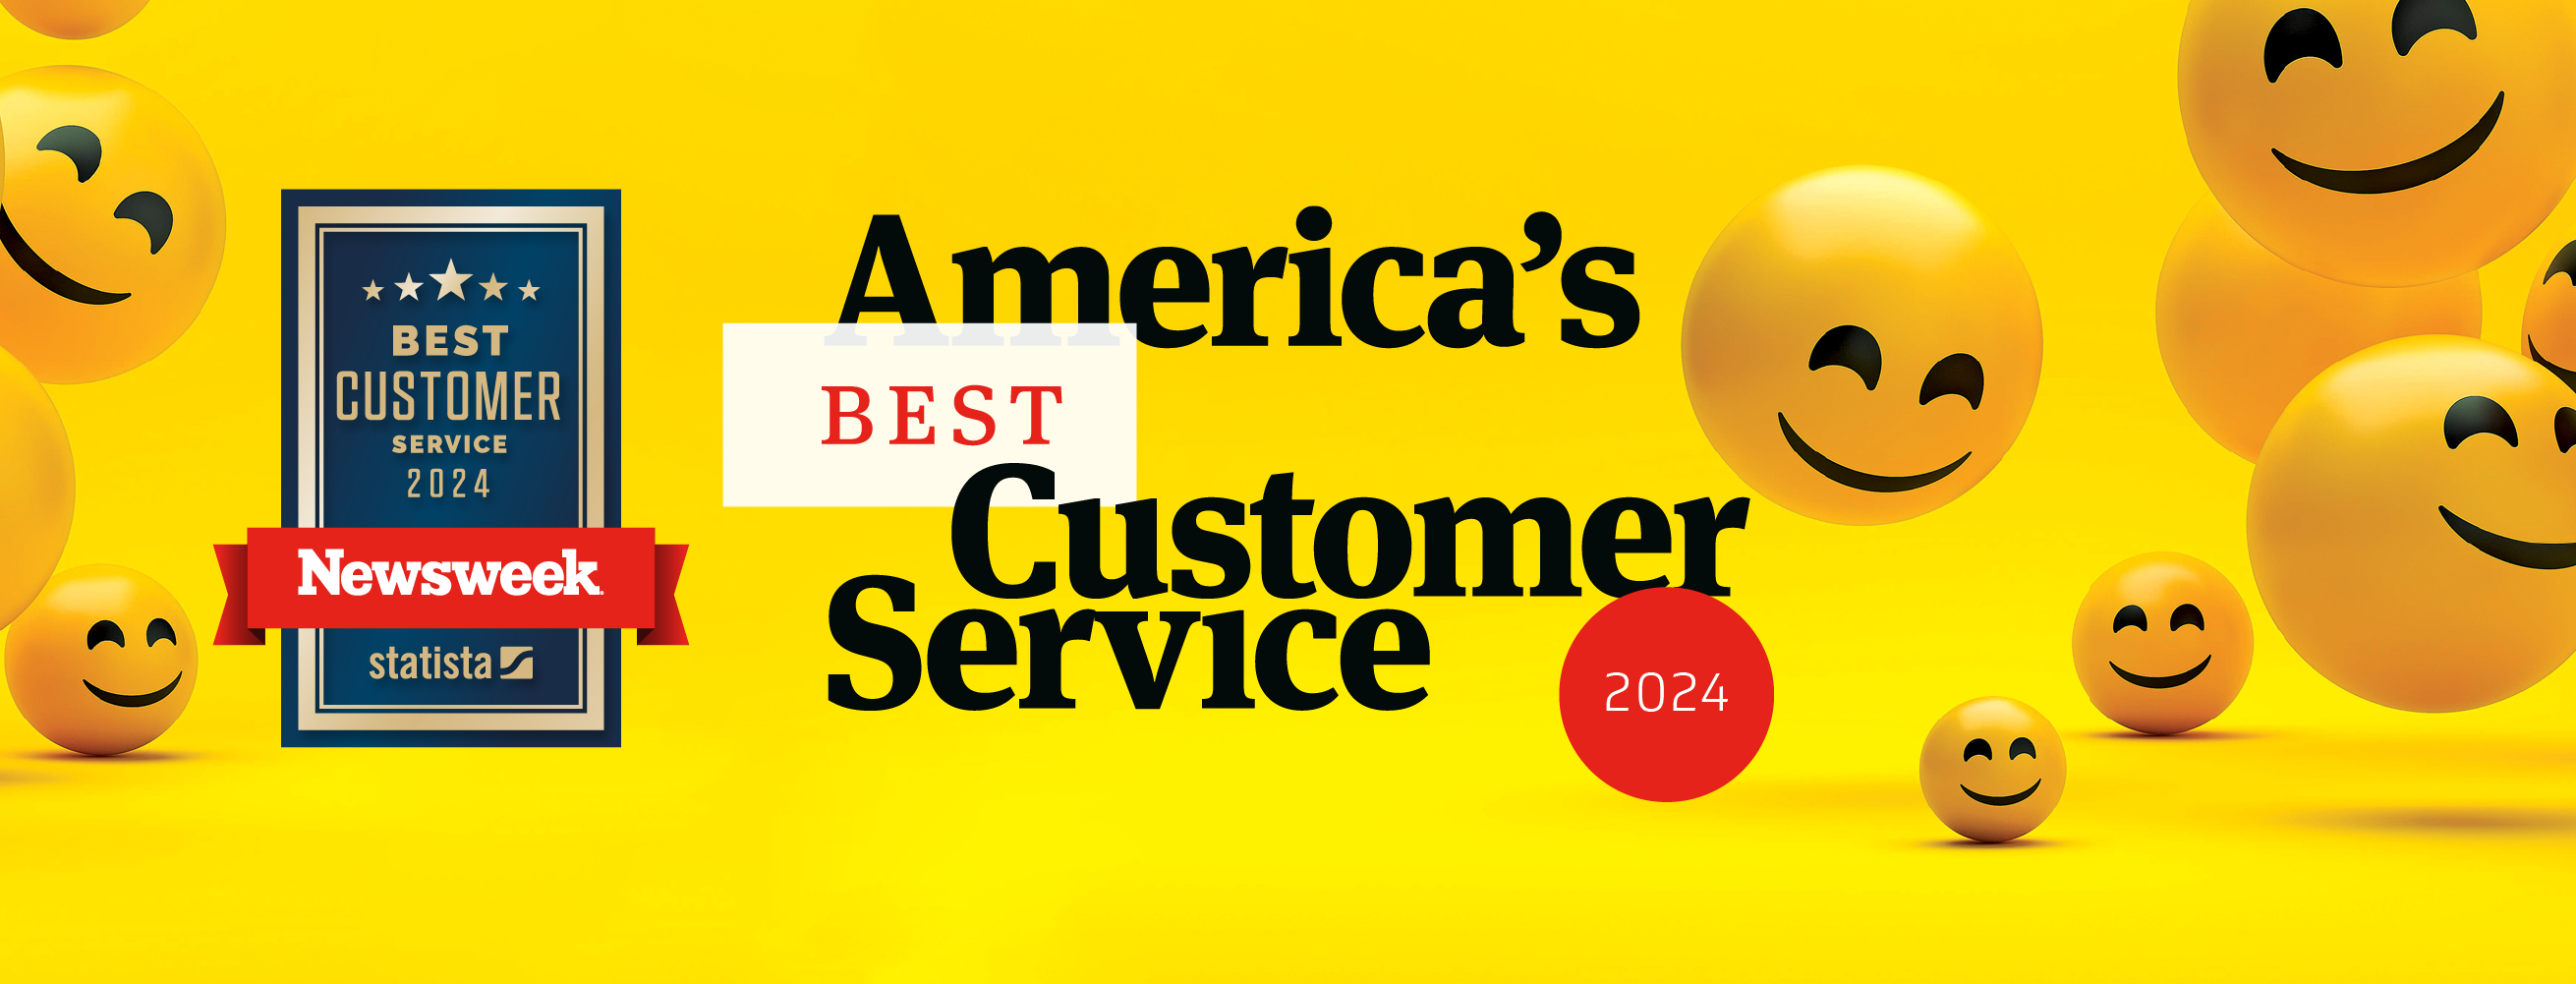 Americas Best Customer Service 2024